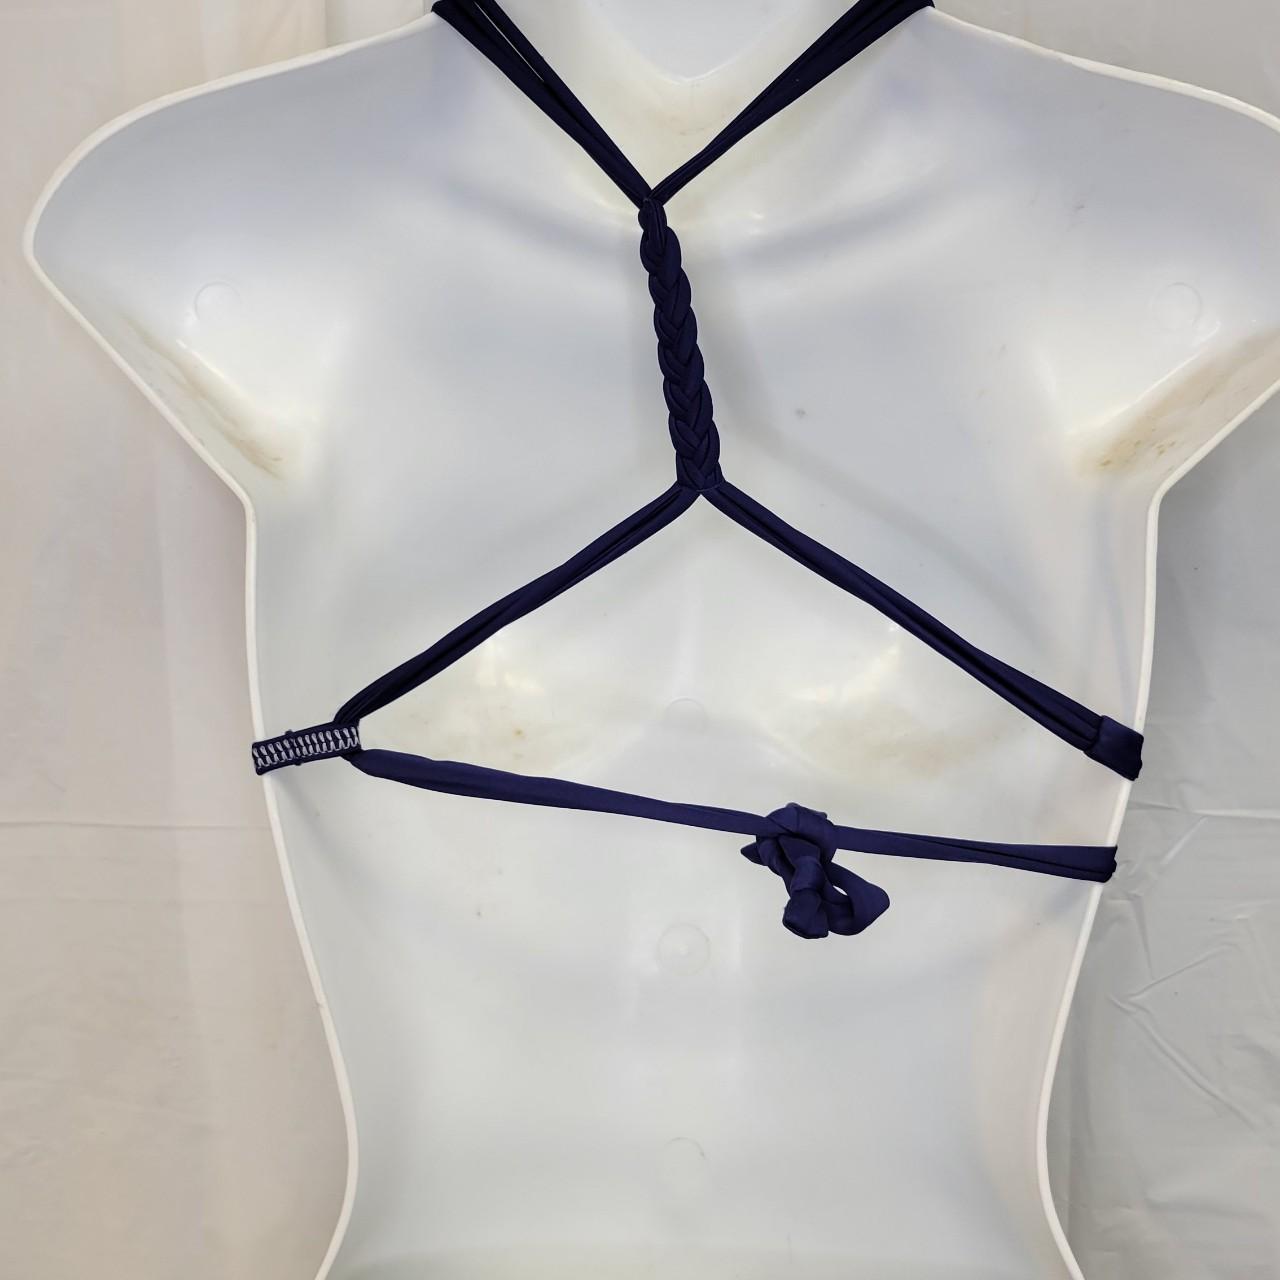 Body Glove Women's White and Blue Bikinis-and-tankini-sets (5)